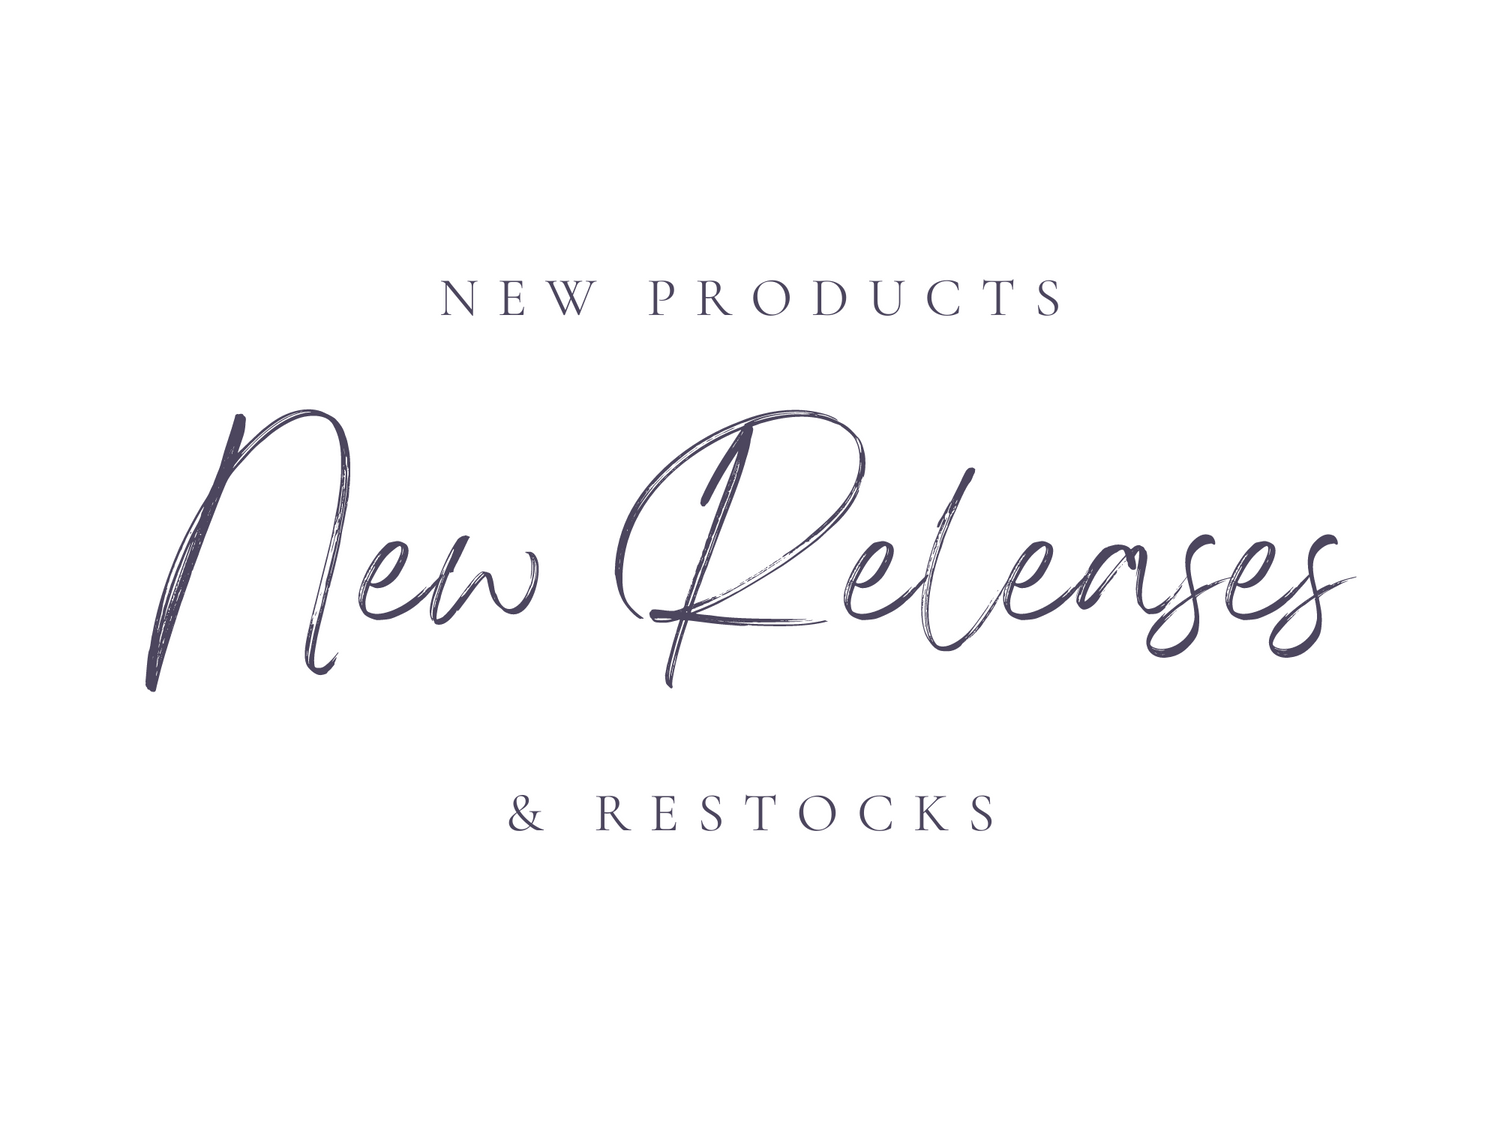 New Releases & Restocks